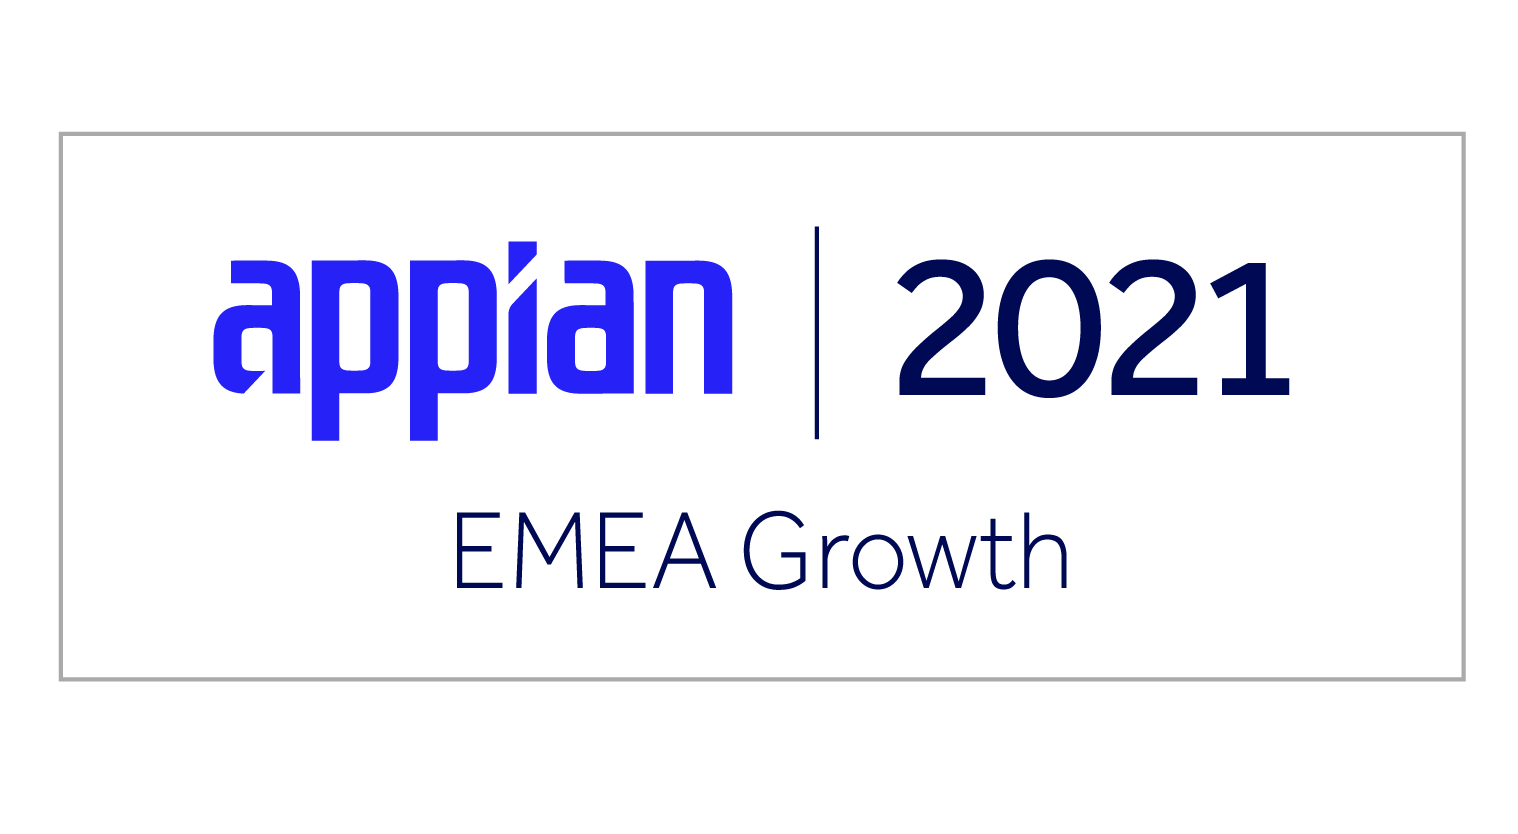 Appian EMEA Growth 2021